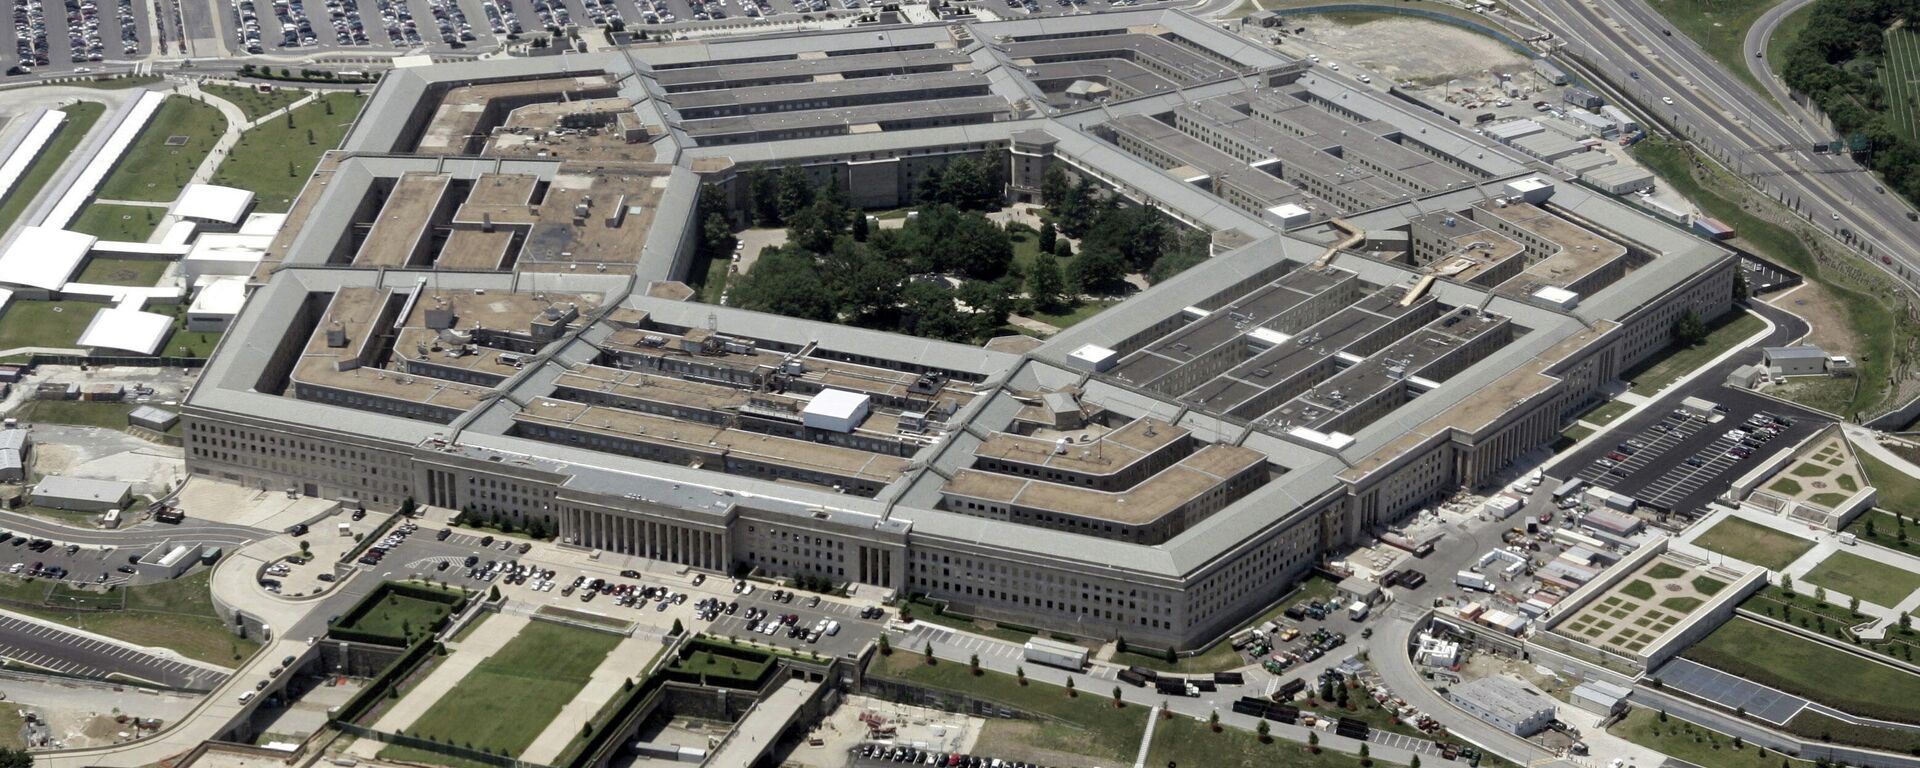  An aerial view of the Pentagon building in Washington, June 15, 2005 - Sputnik International, 1920, 14.03.2022